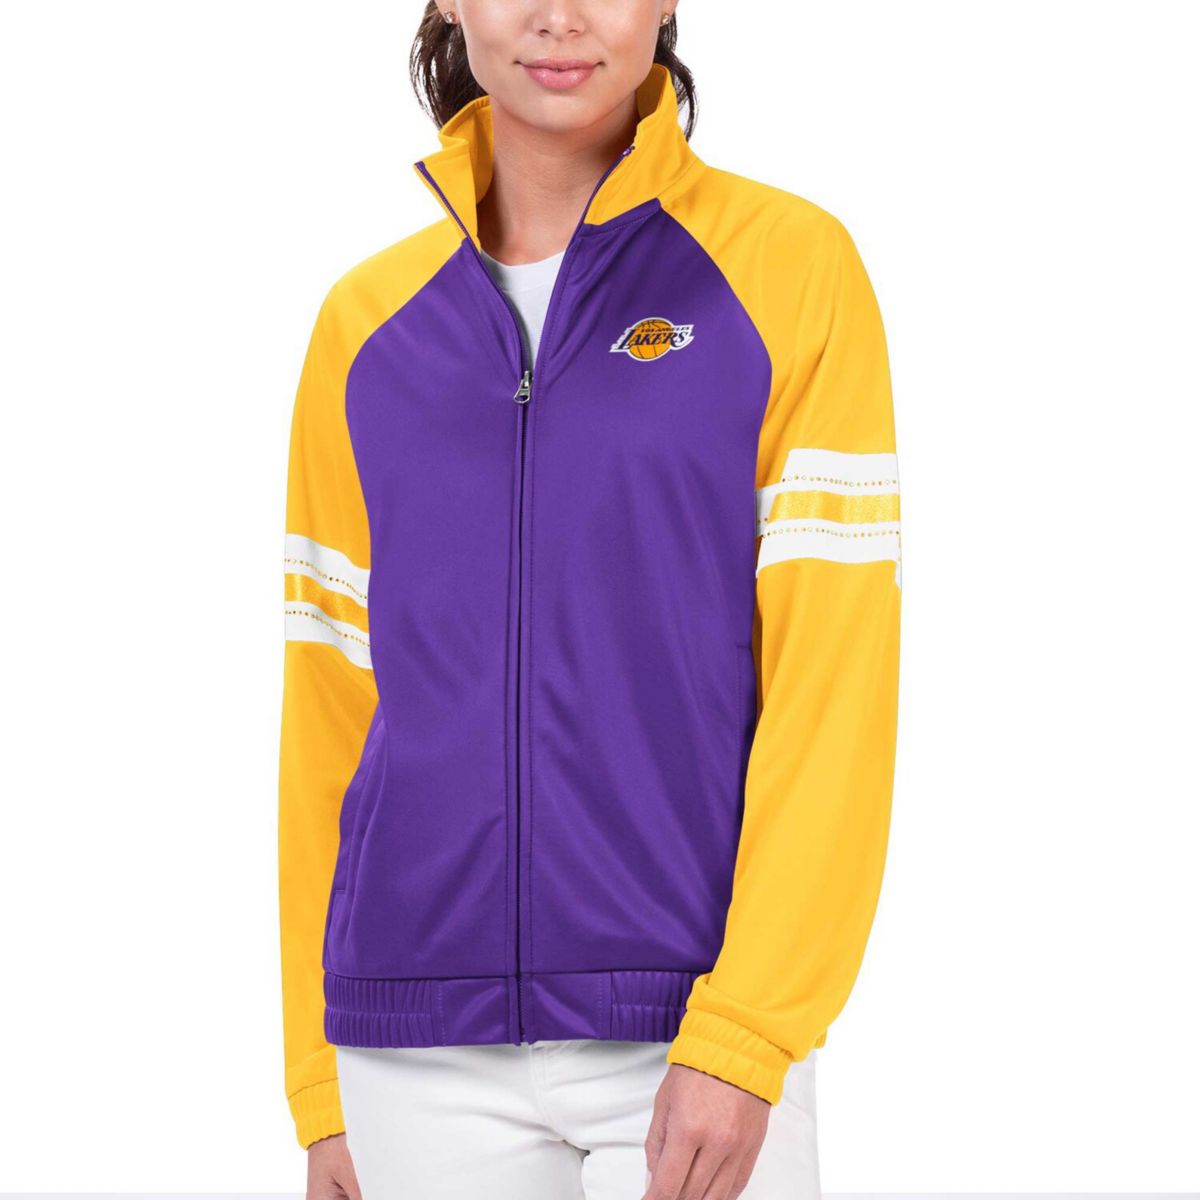 Женская спортивная куртка с молнией во всю длину G-III 4Her от Carl Banks Purple Los Angeles Lakers Main Player реглан со стразами In The Style